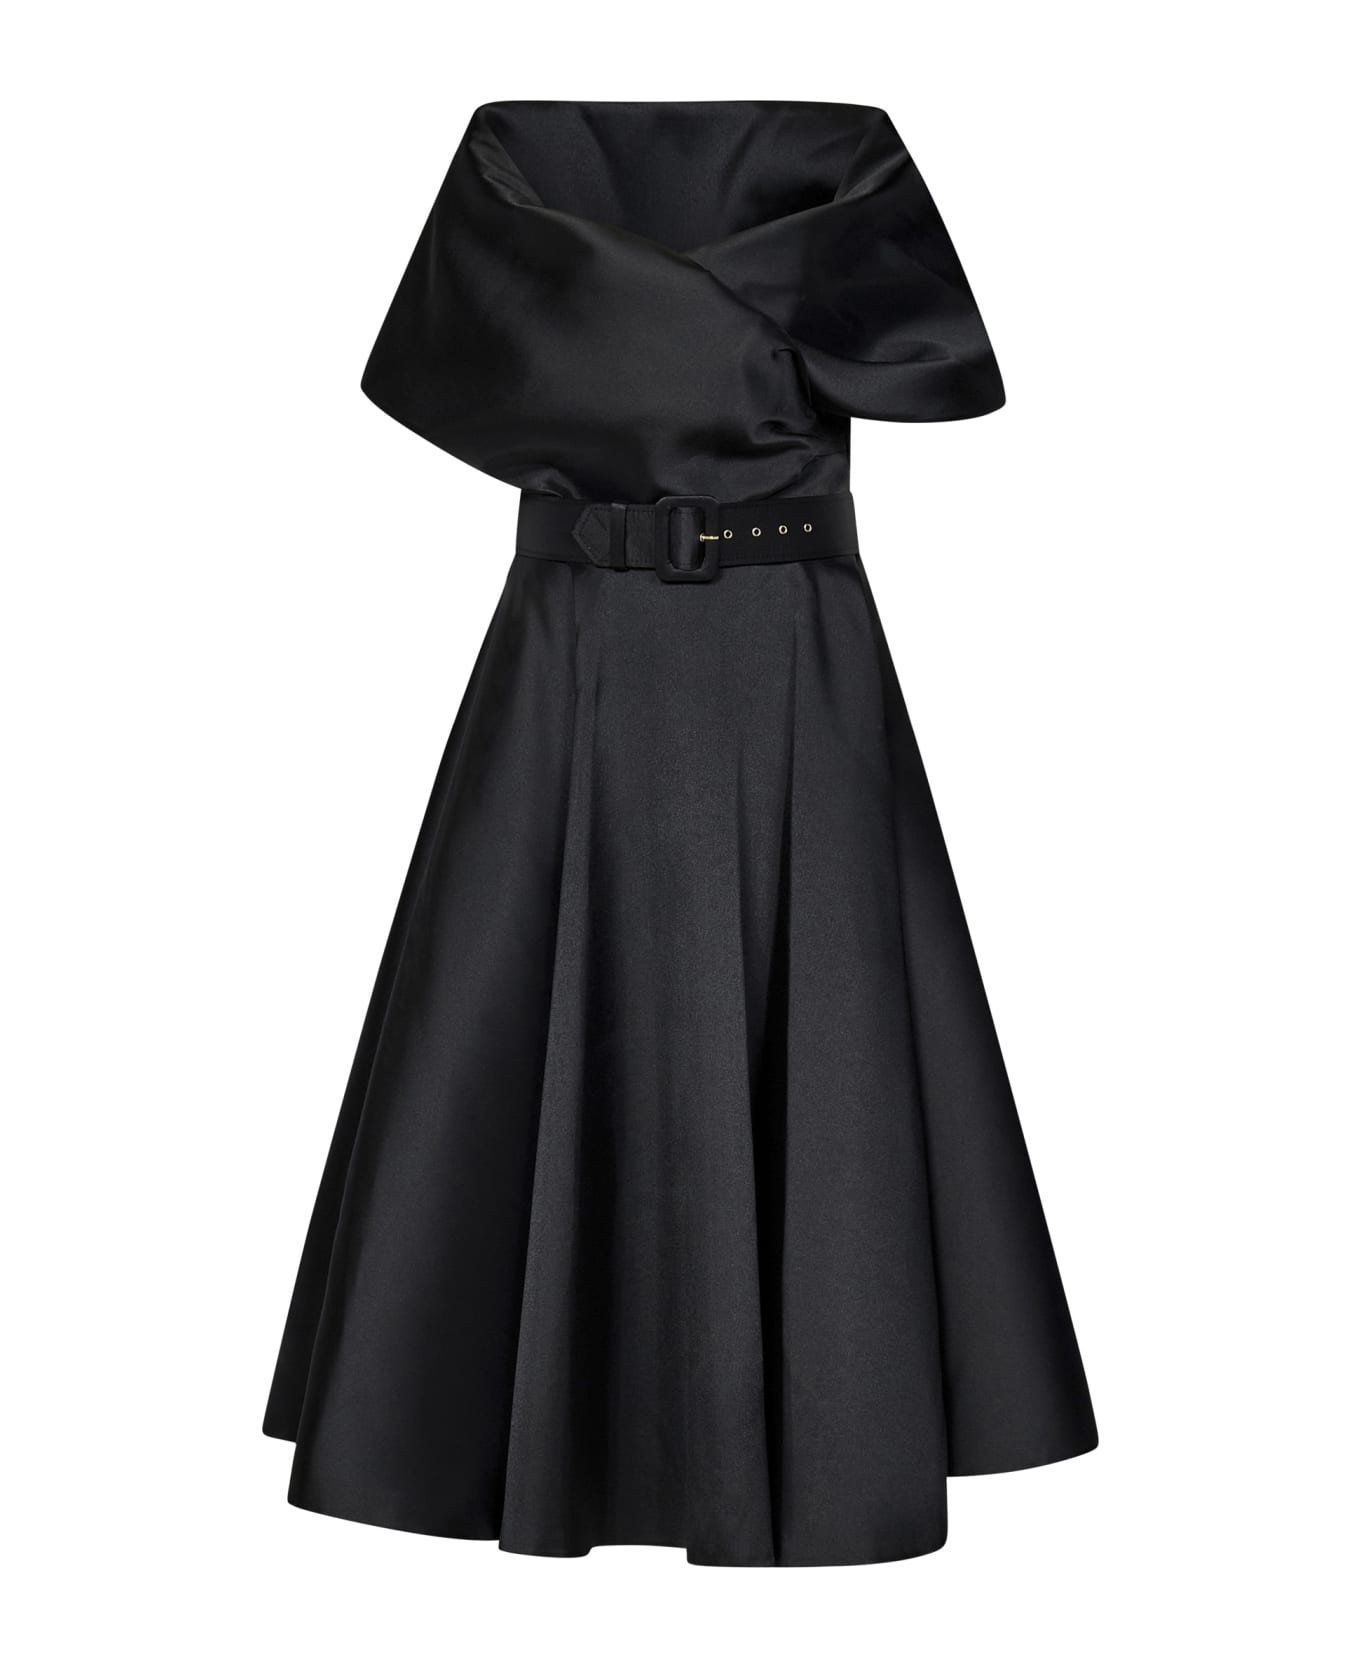 Rhea Costa Rima Dress - Black